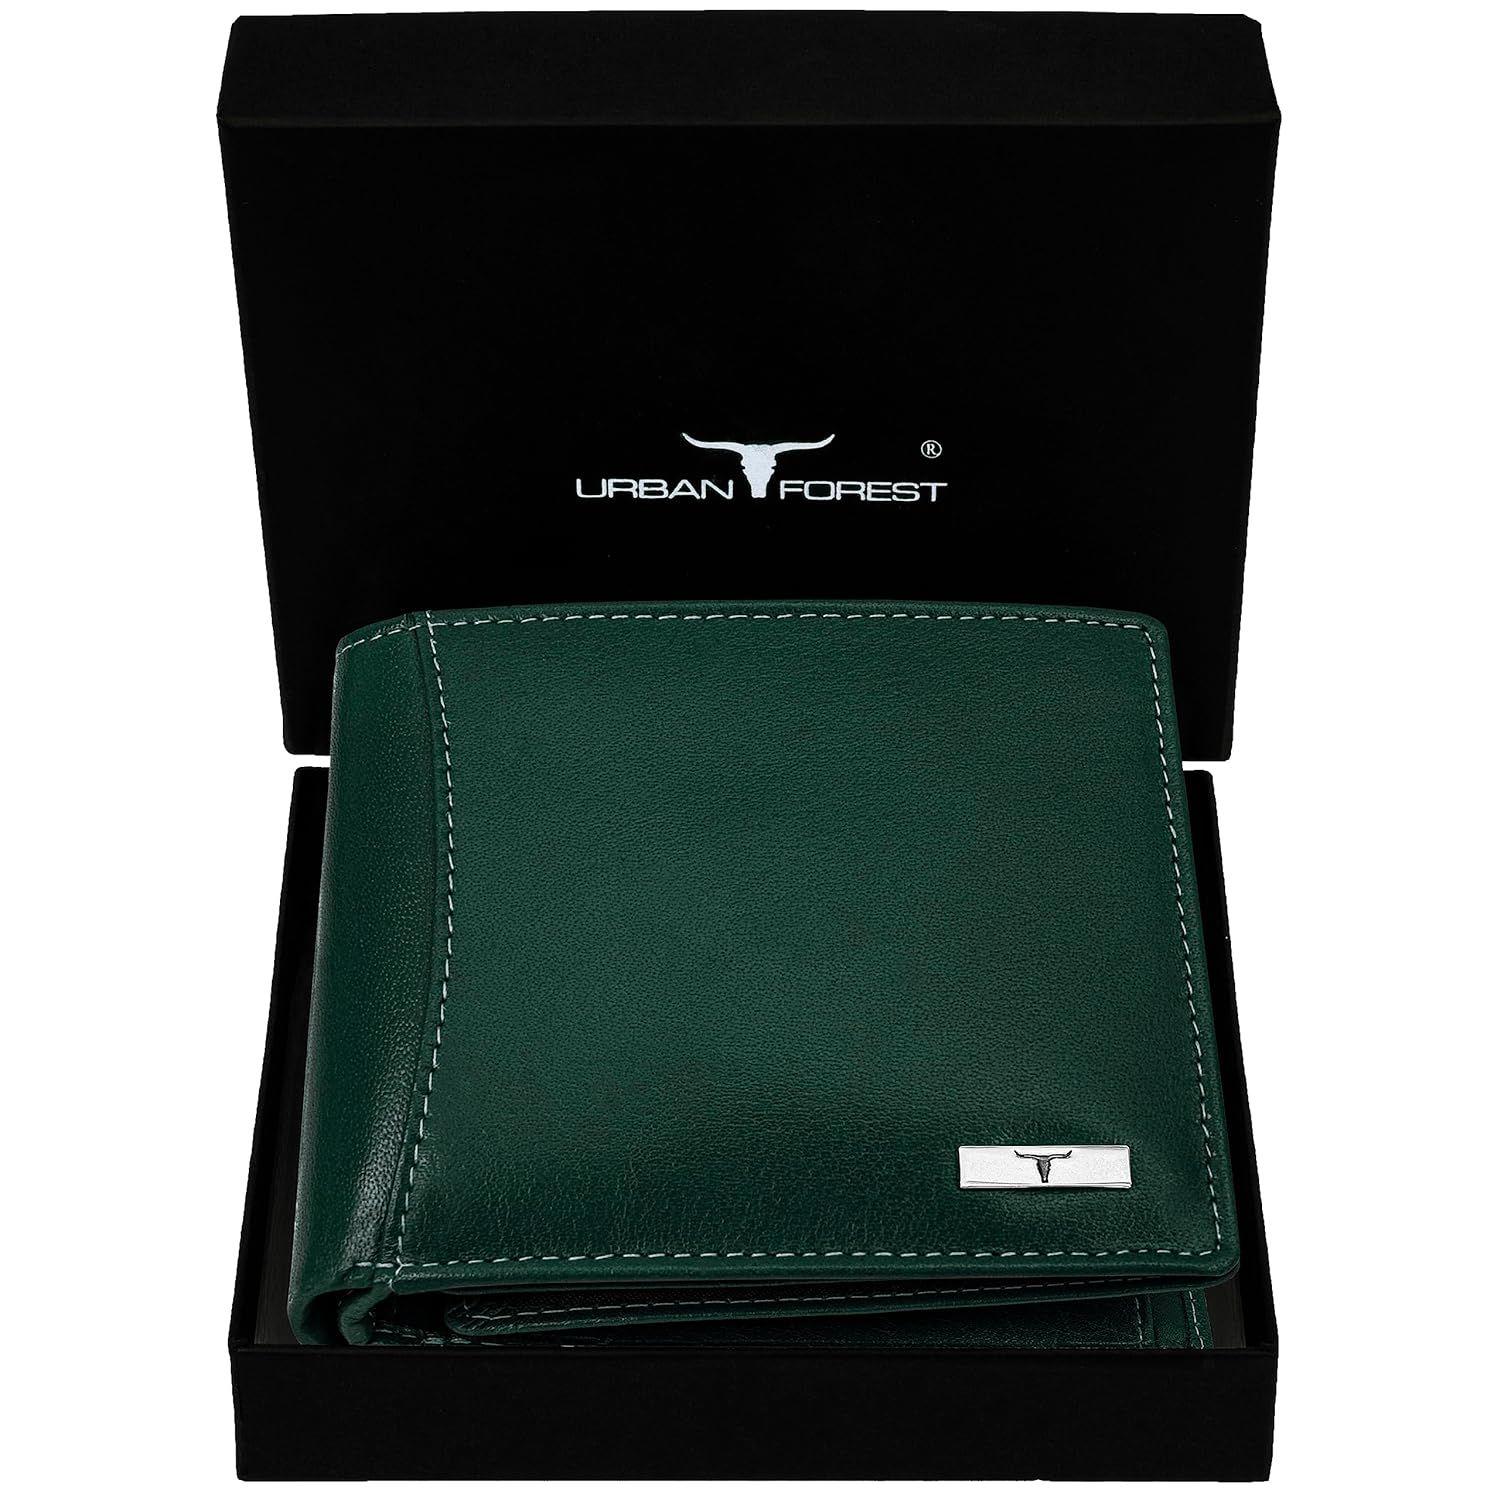 Vintage Goat leather Bags Oliver Aniline Green Leather Wallet for Men